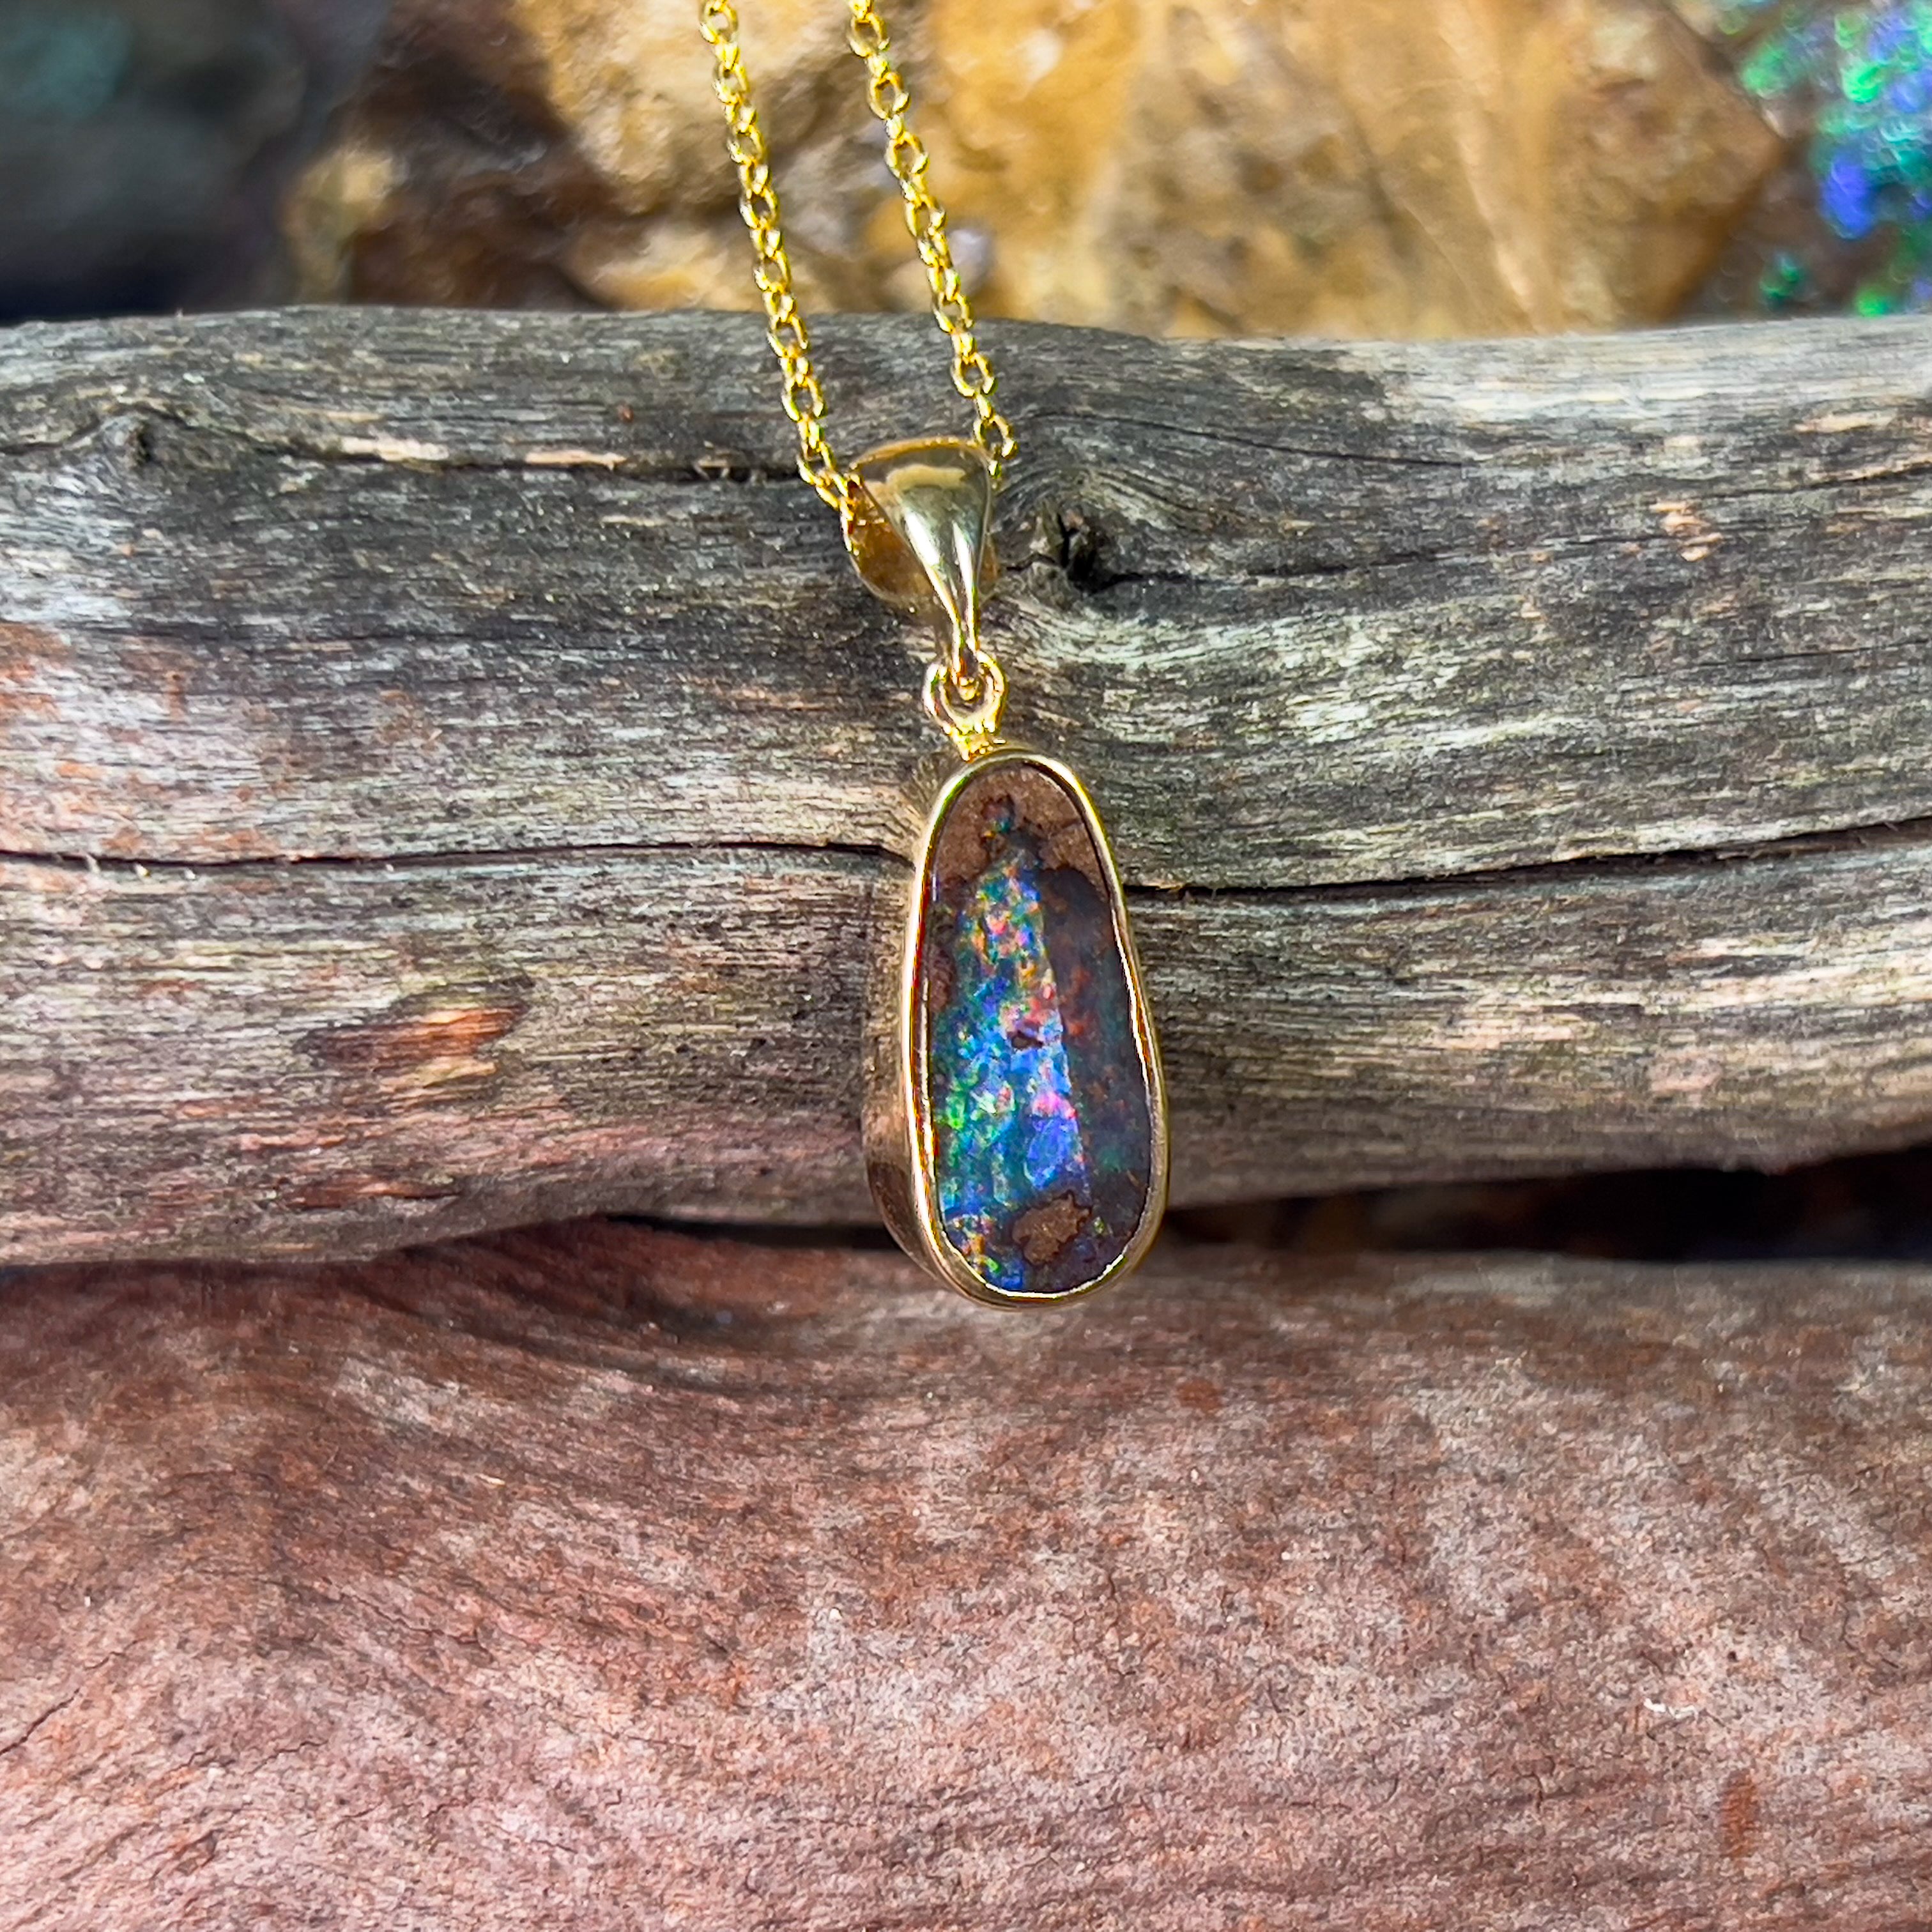 18kt Yellow Gold Boulder Opal 1.89ct pendant - Masterpiece Jewellery Opal & Gems Sydney Australia | Online Shop